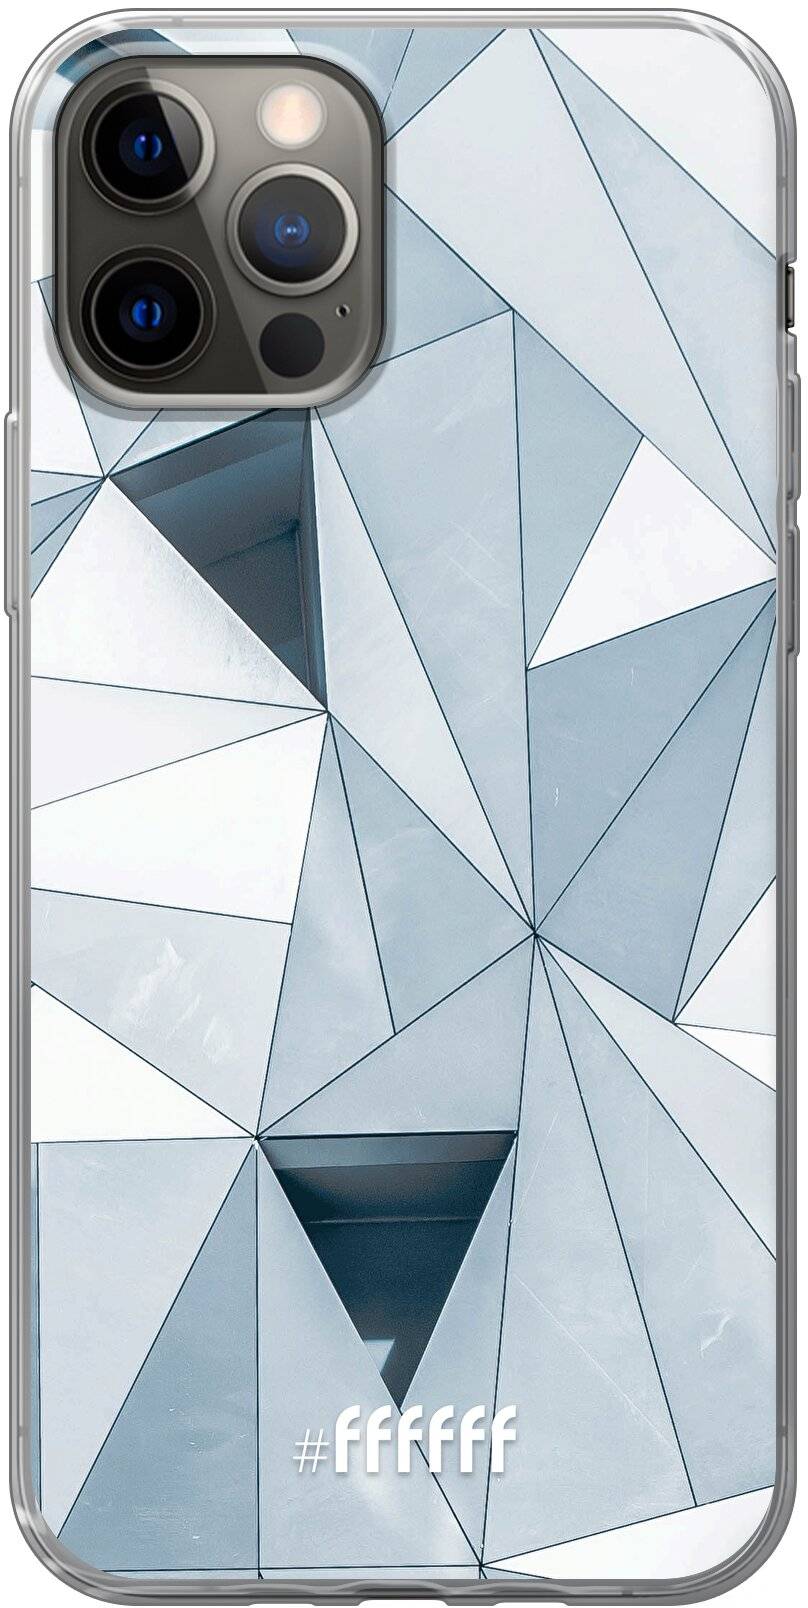 Mirrored Polygon iPhone 12 Pro